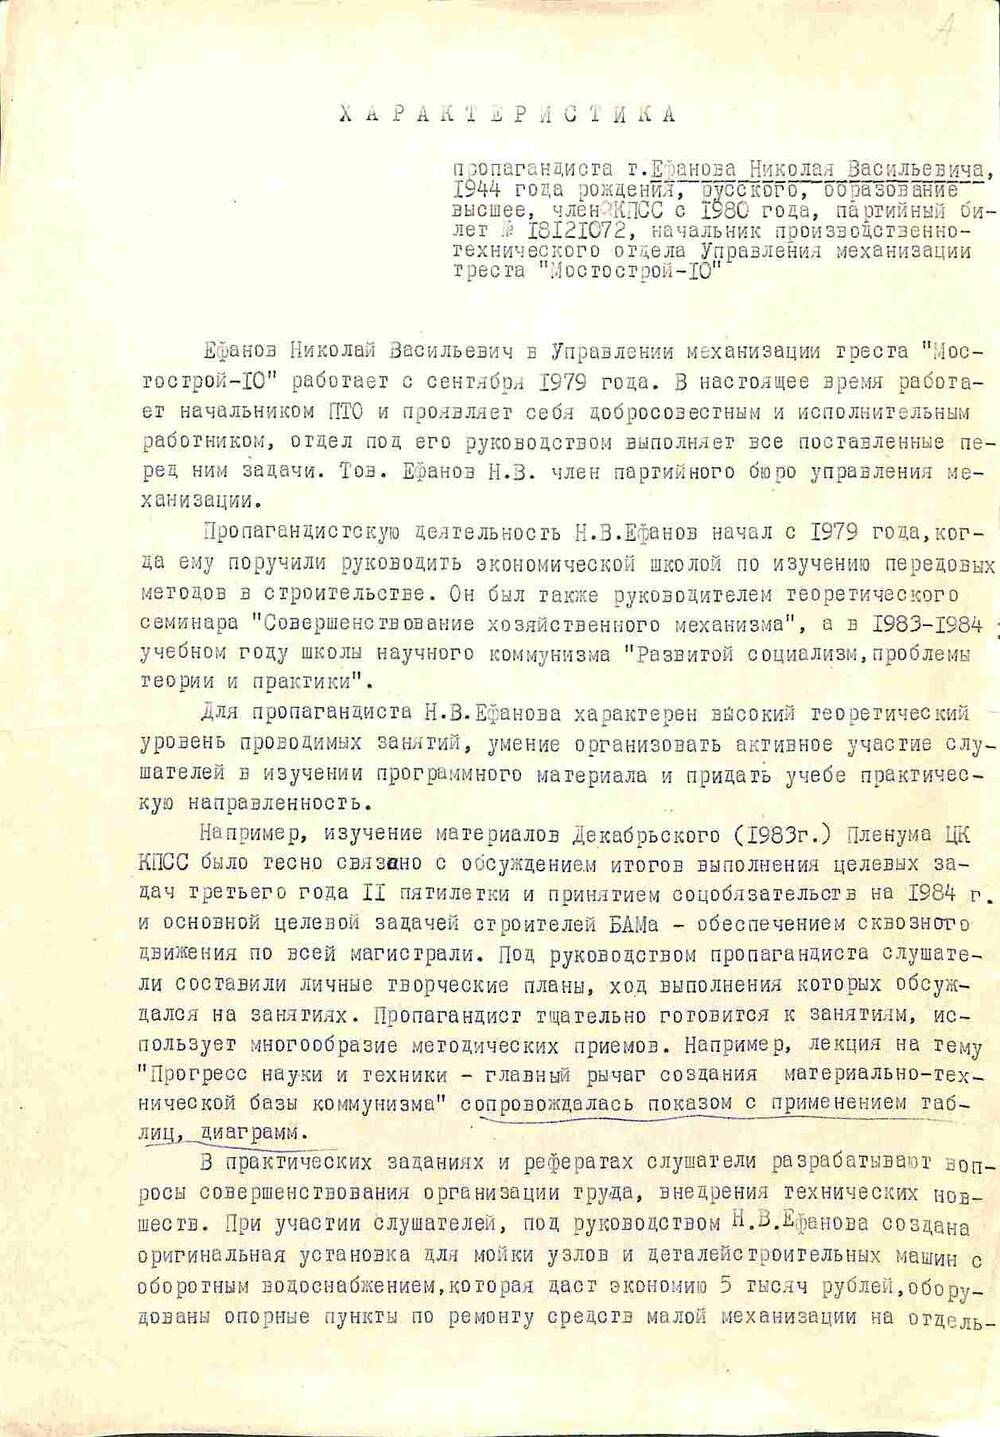 Характеристика на пропагандиста Ефанова Н.в., начальника ПТО треста МС-10. 1984 год